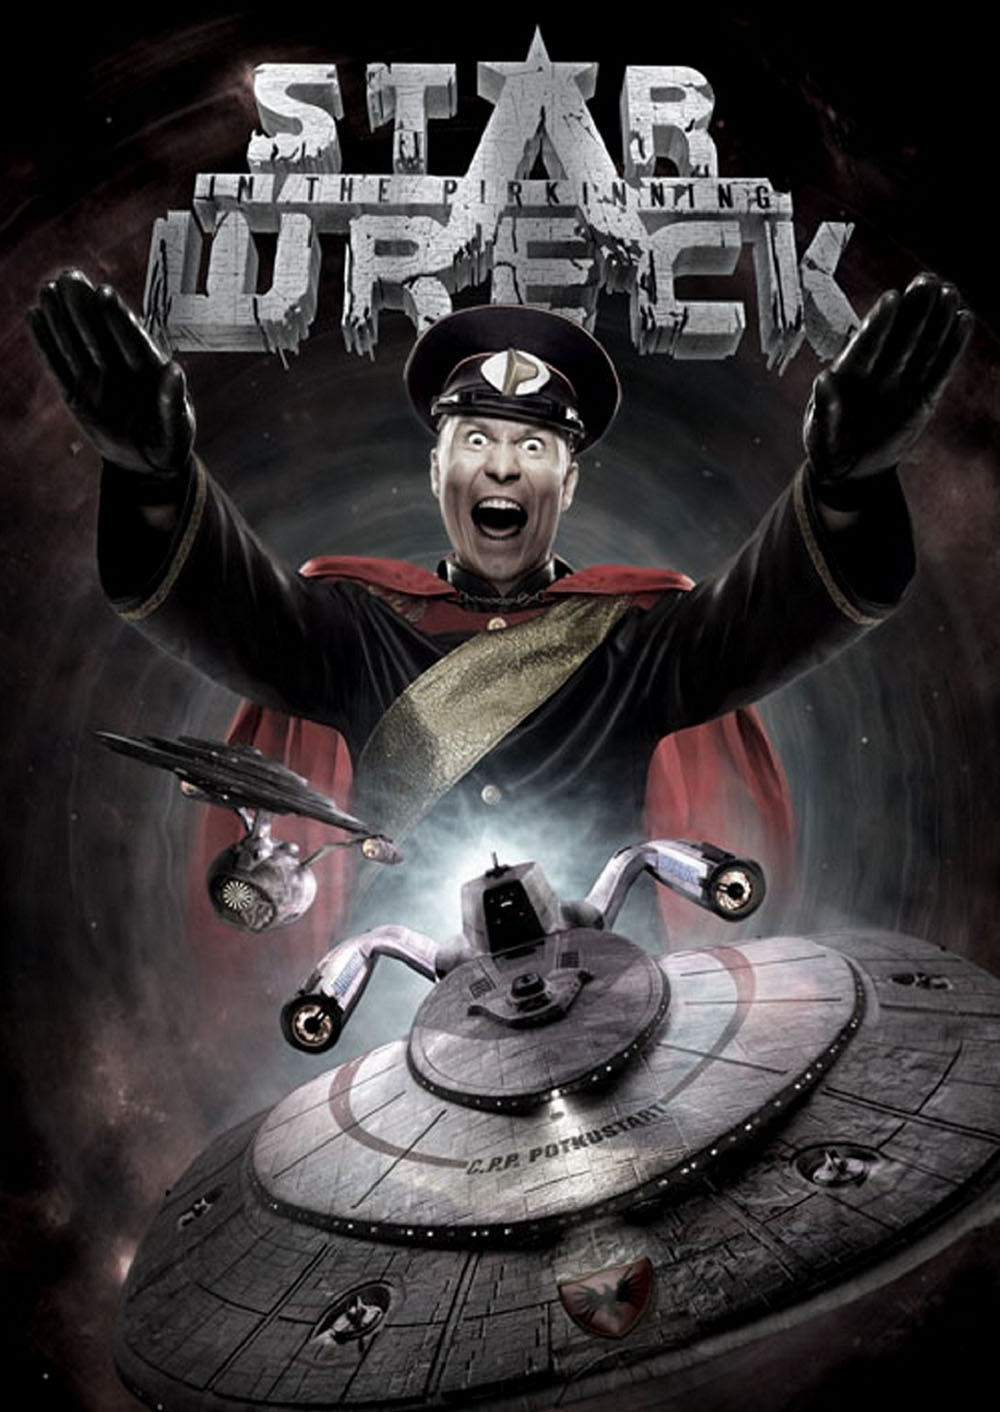 Star Wreck: In the Pirkinning, 2005